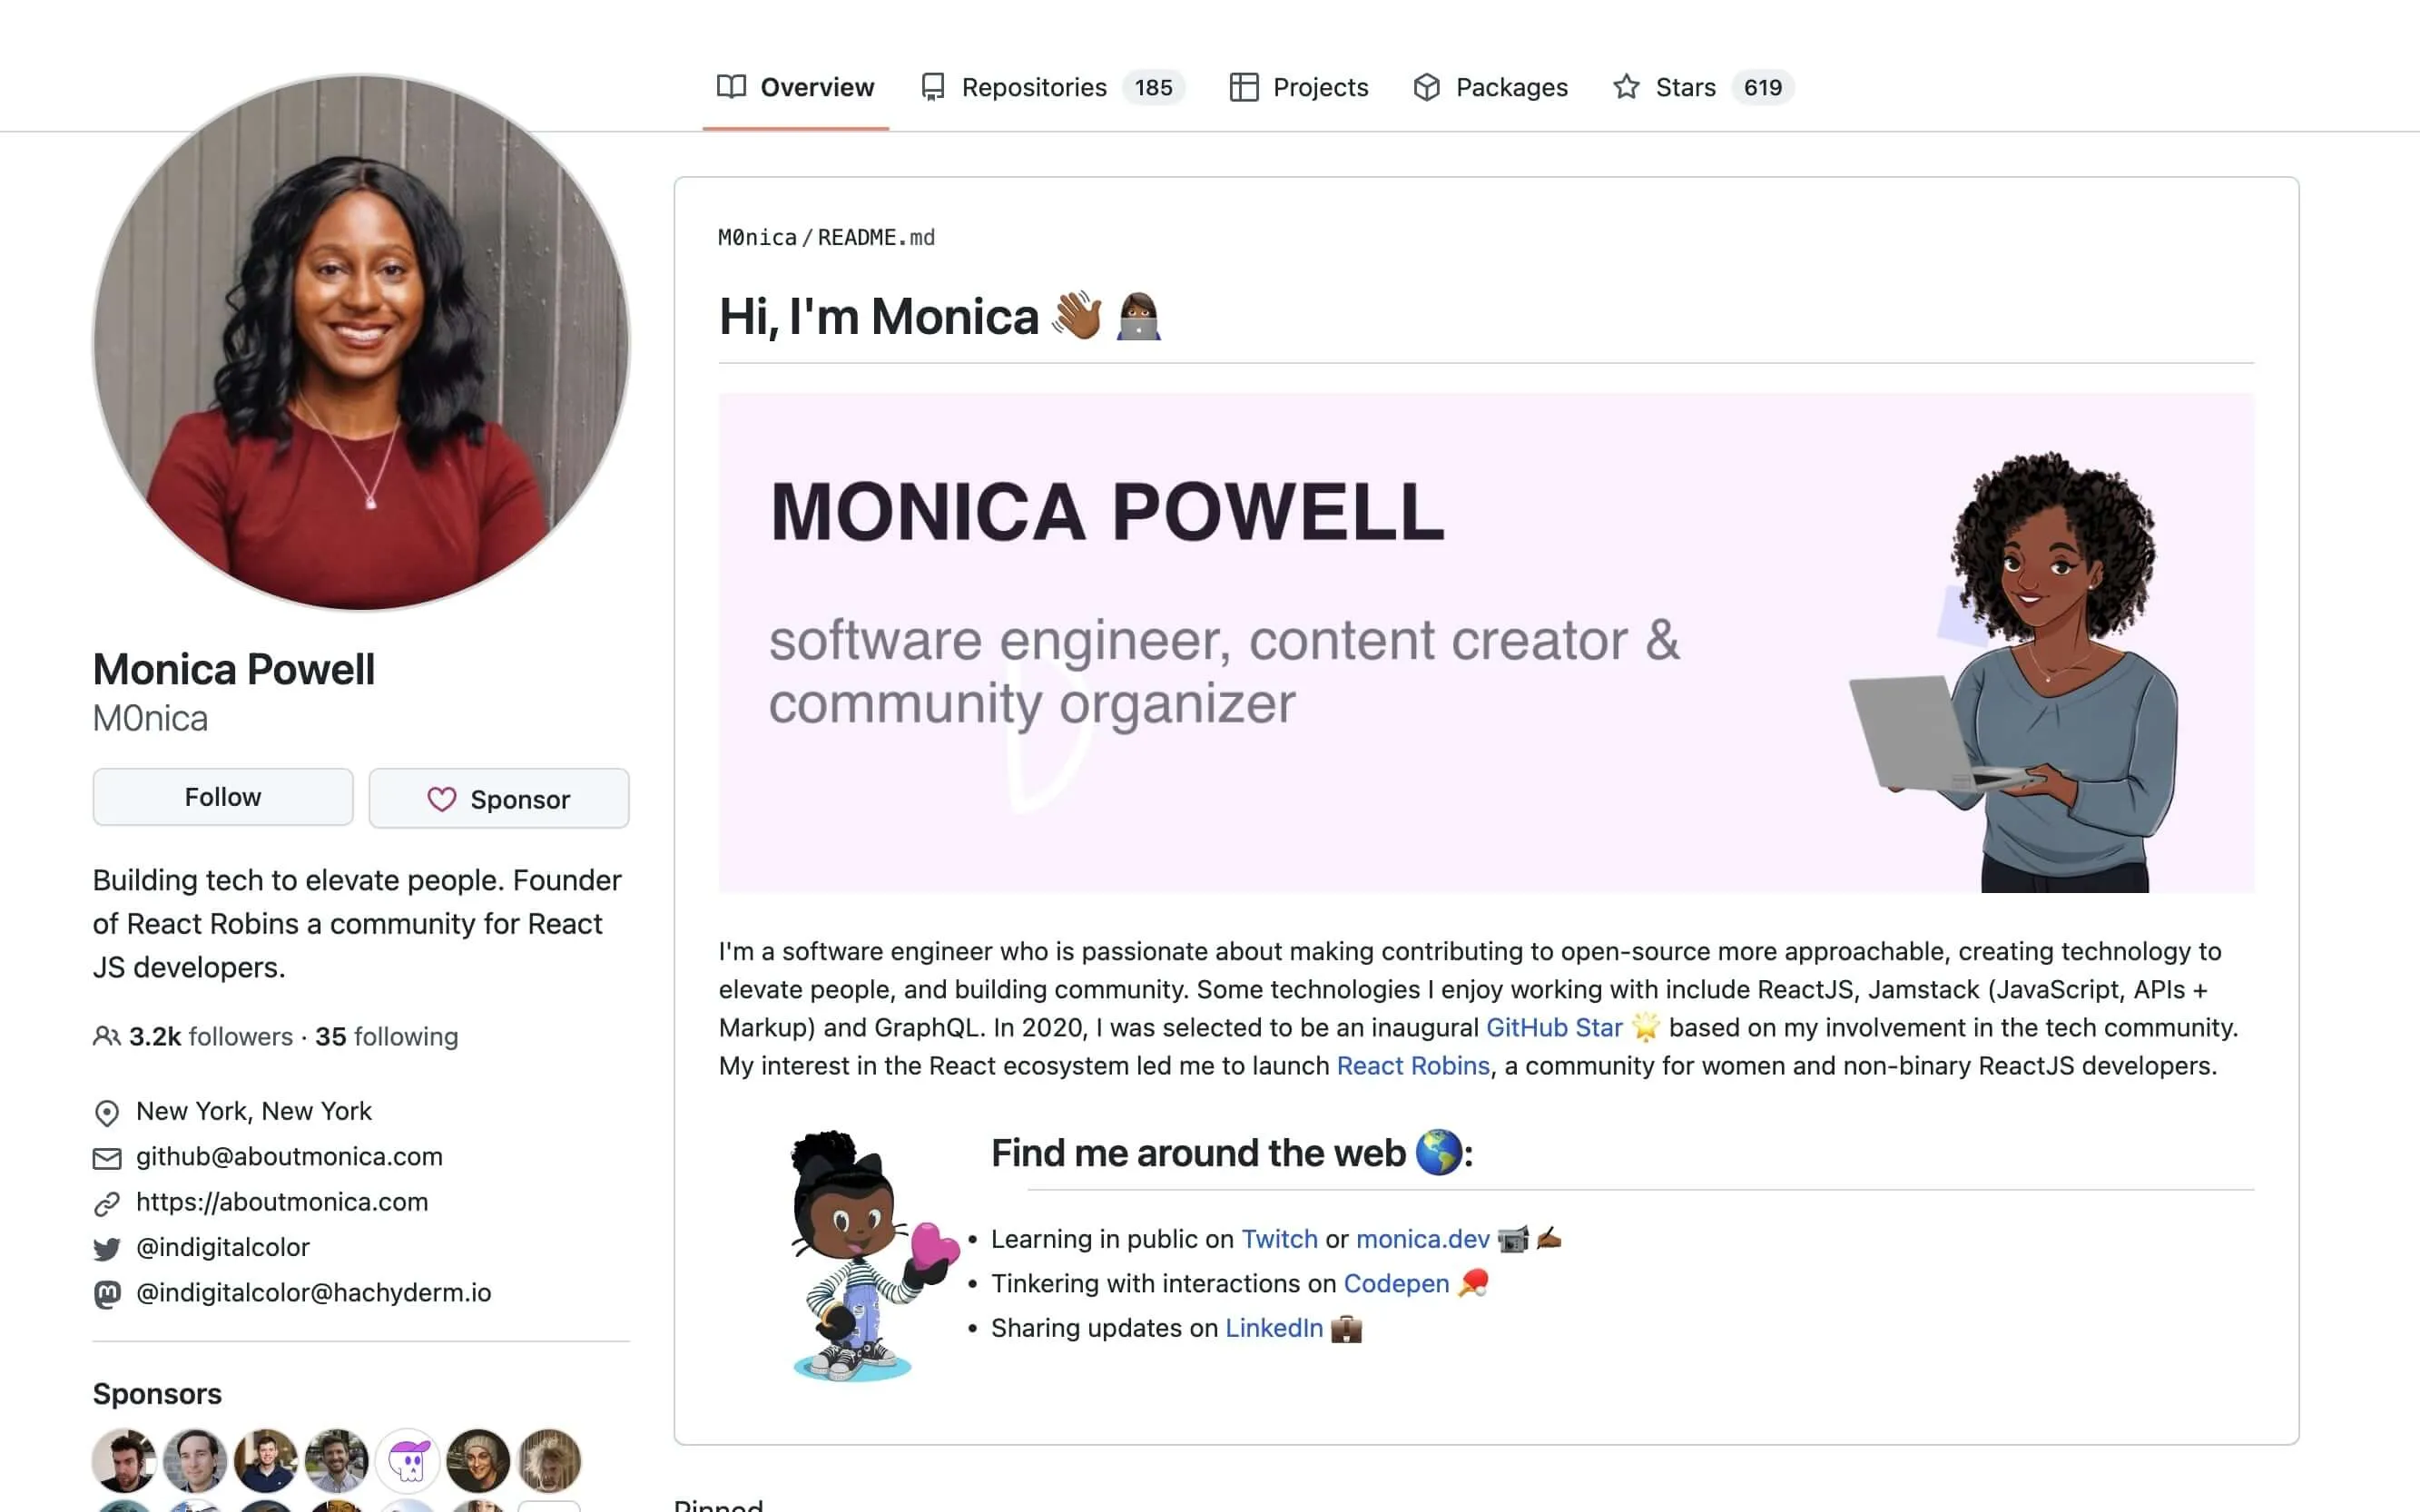 Monica Powell's GitHub profile